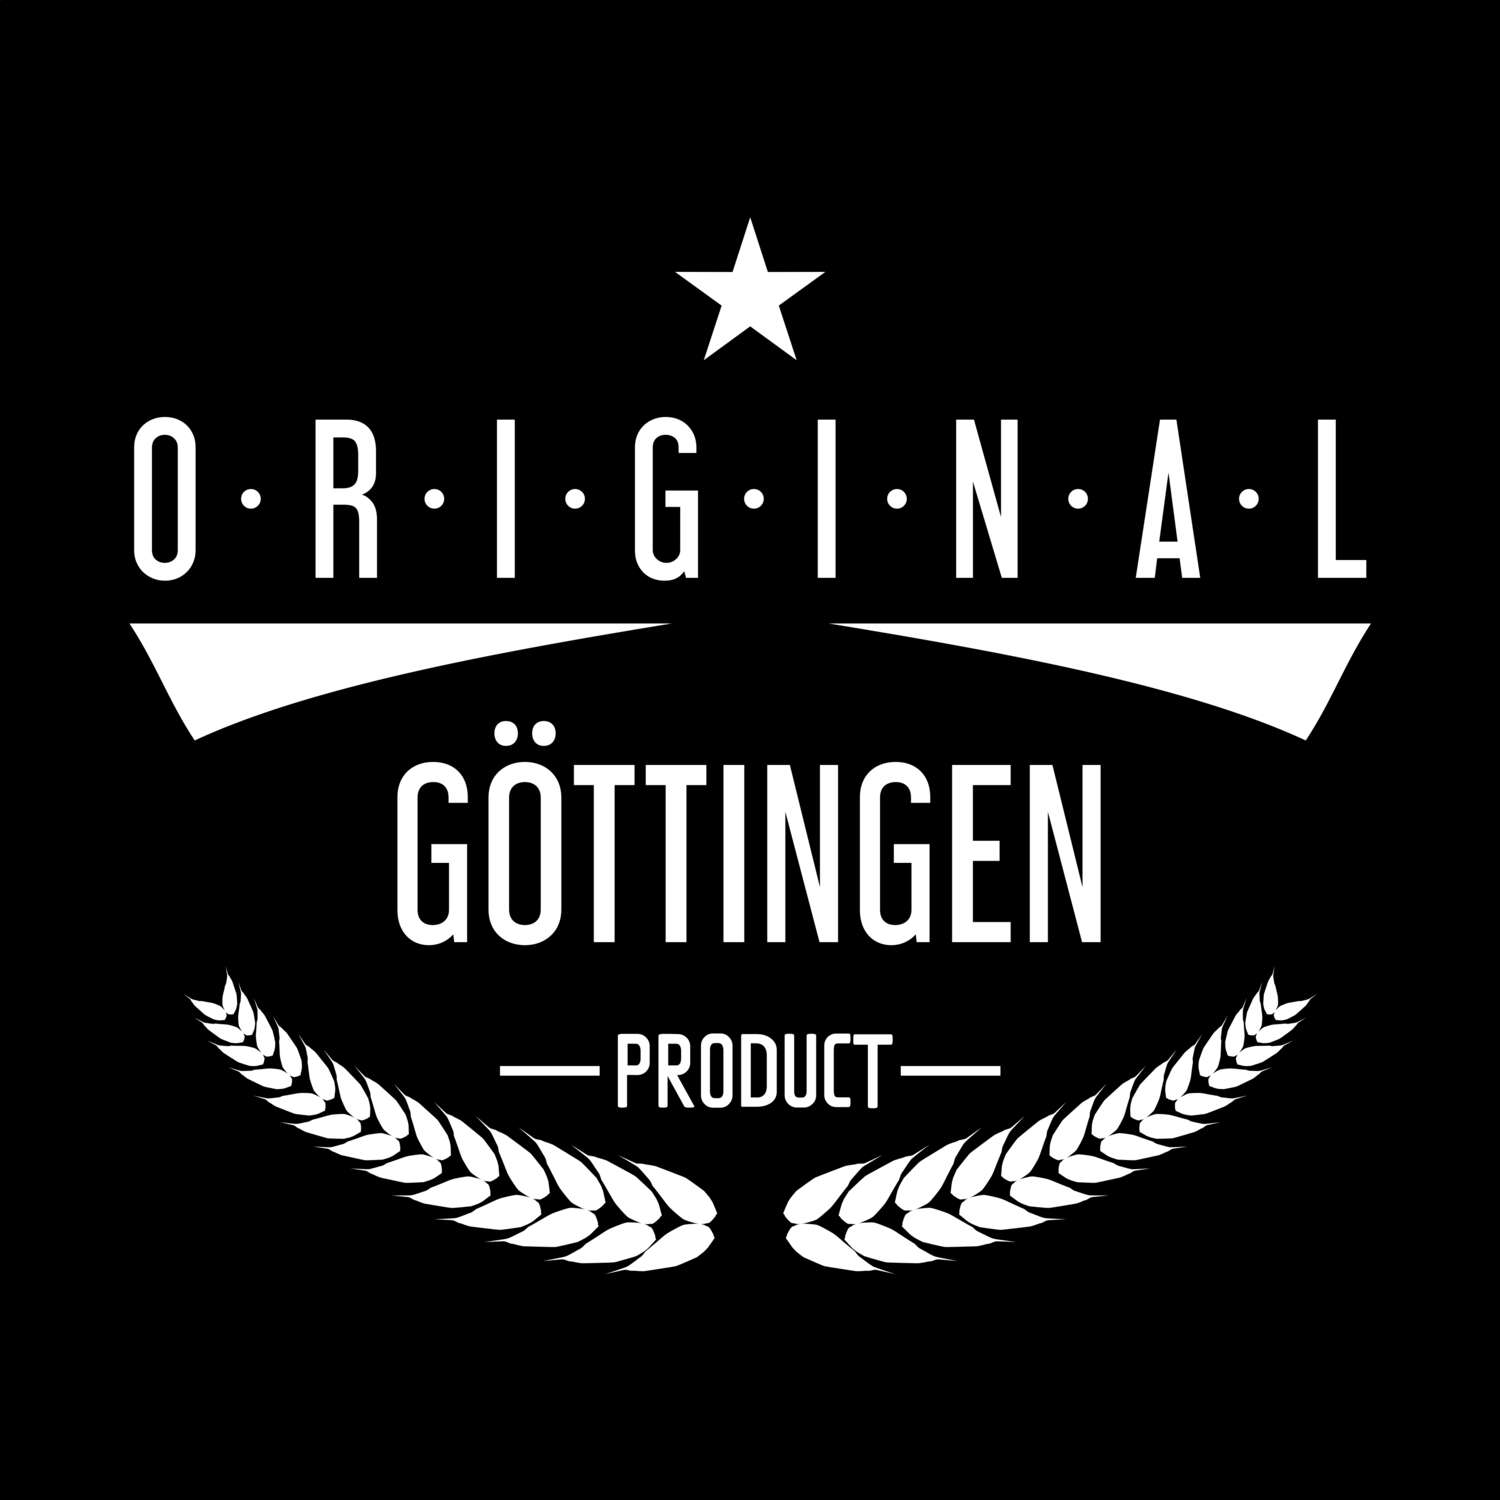 Göttingen T-Shirt »Original Product«